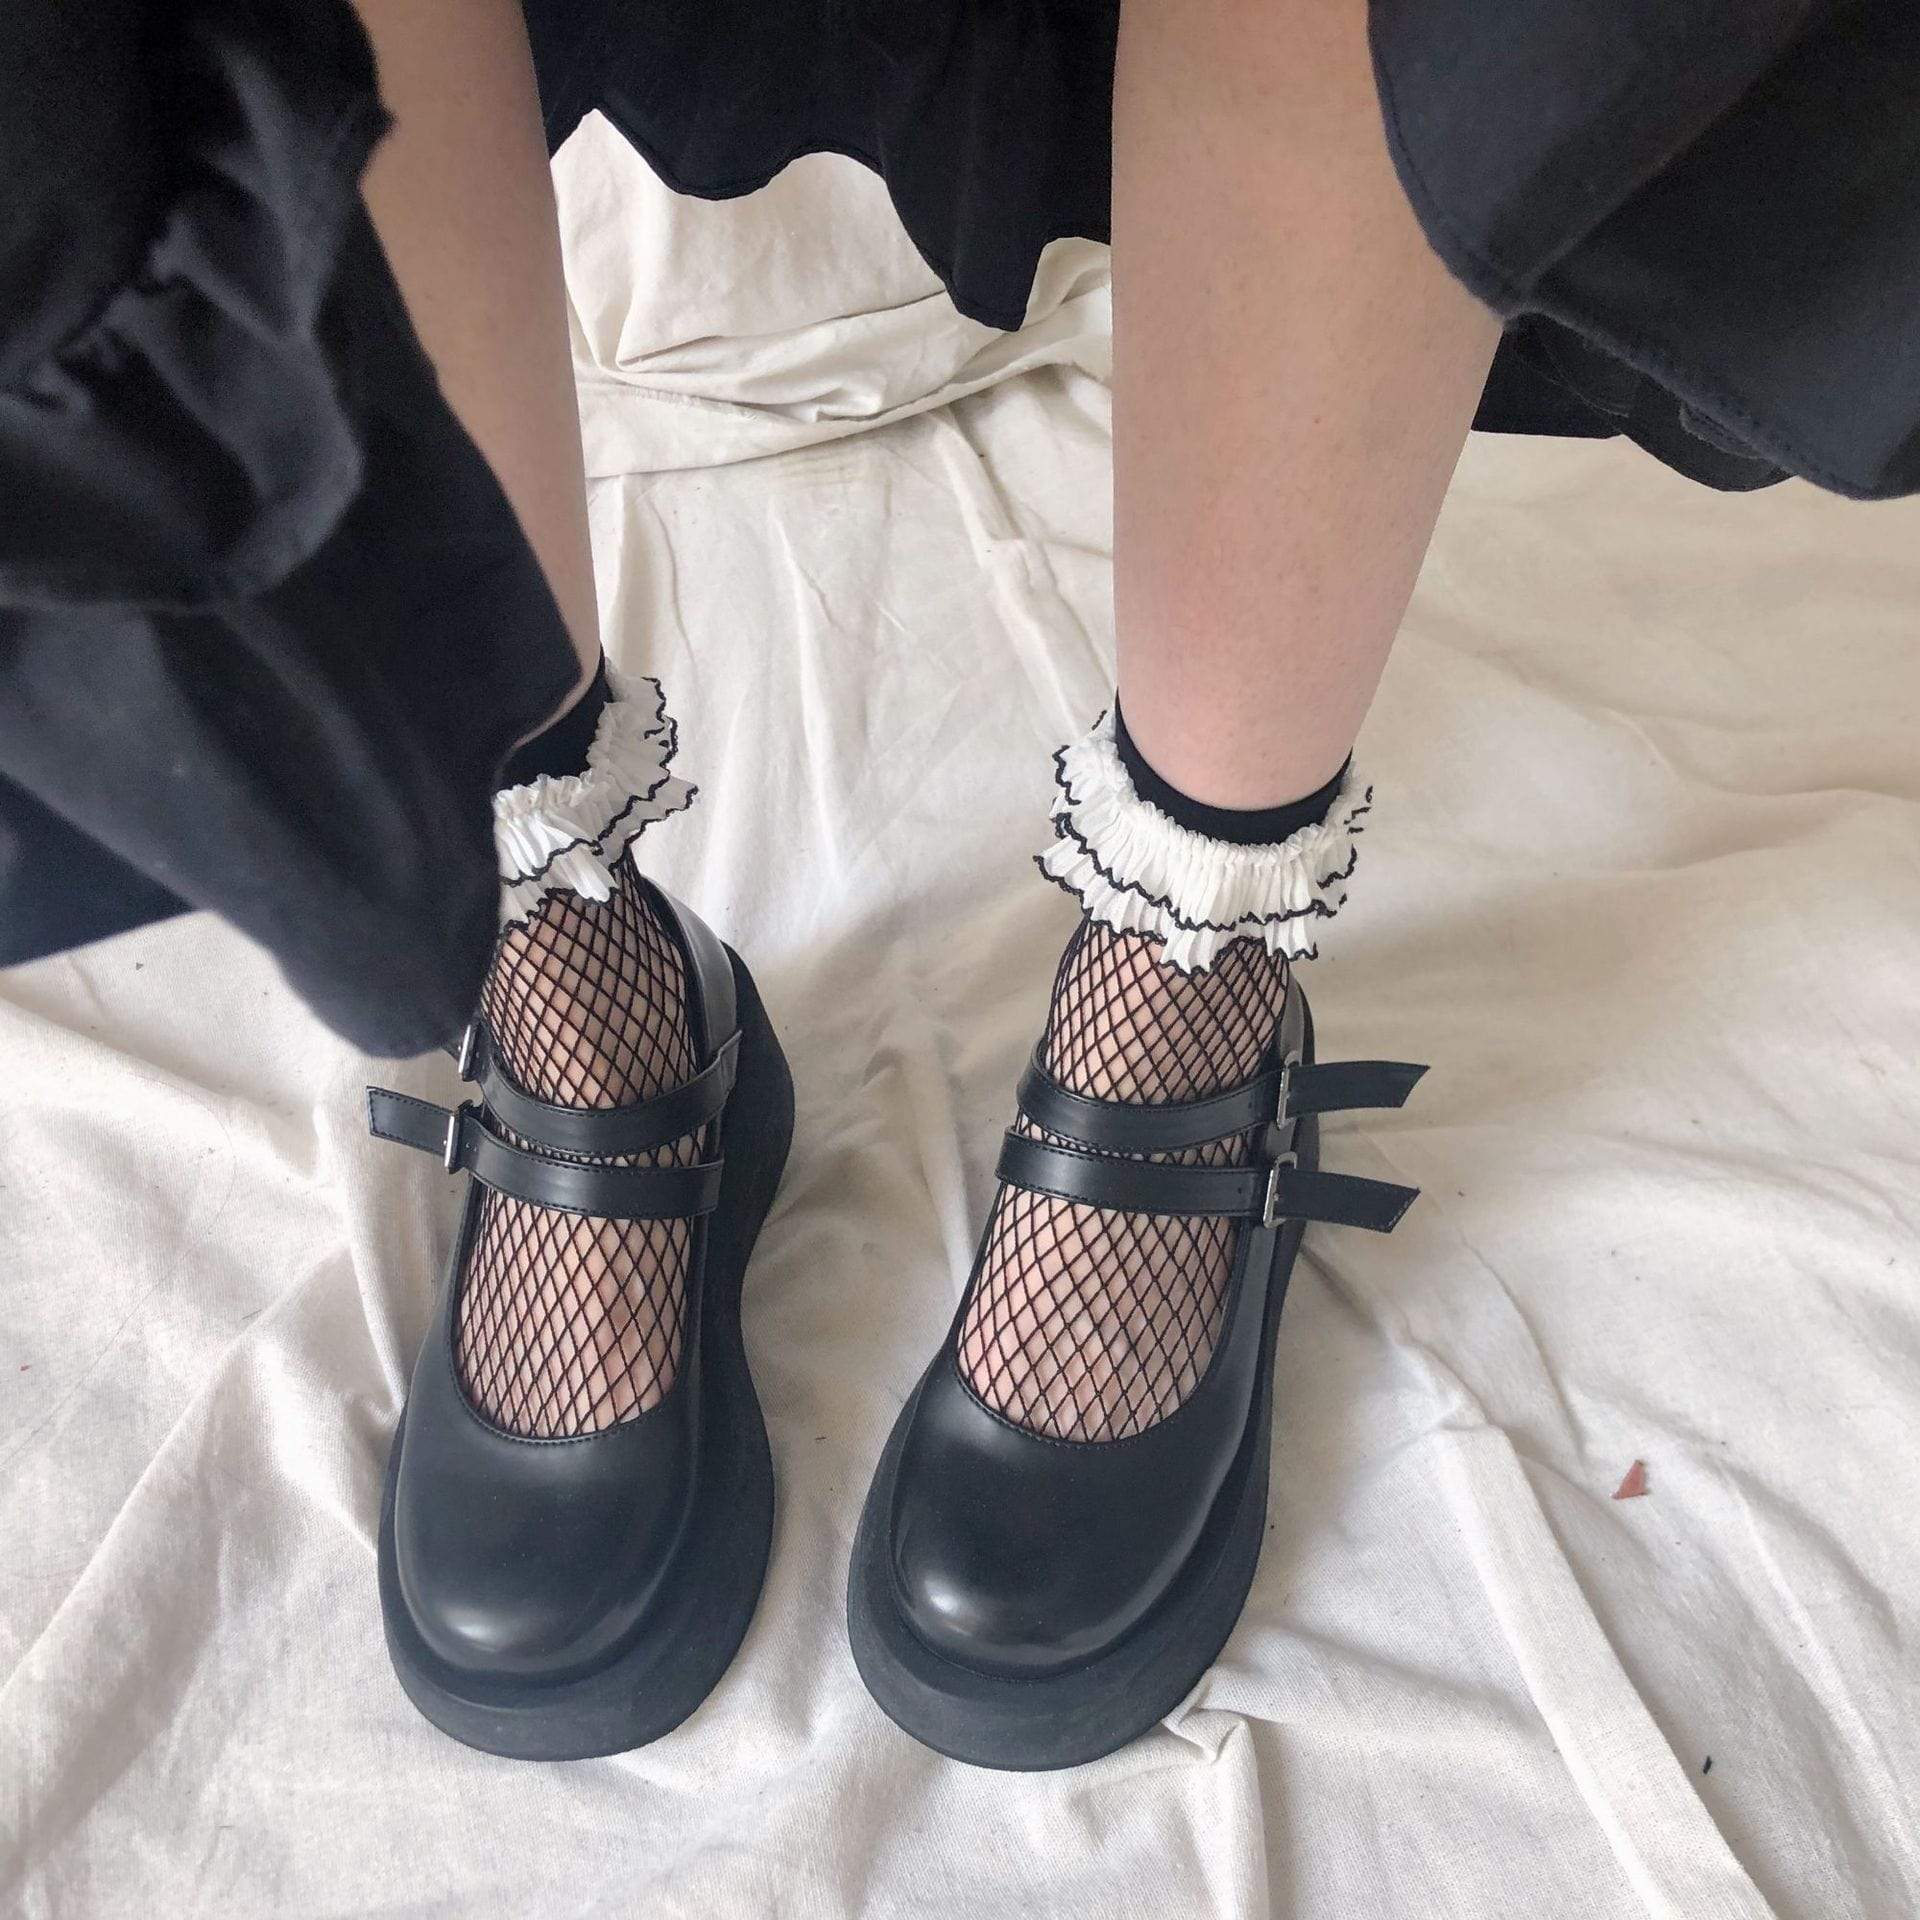 Kobine Women's Lolita Cute Mesh Layered Socks